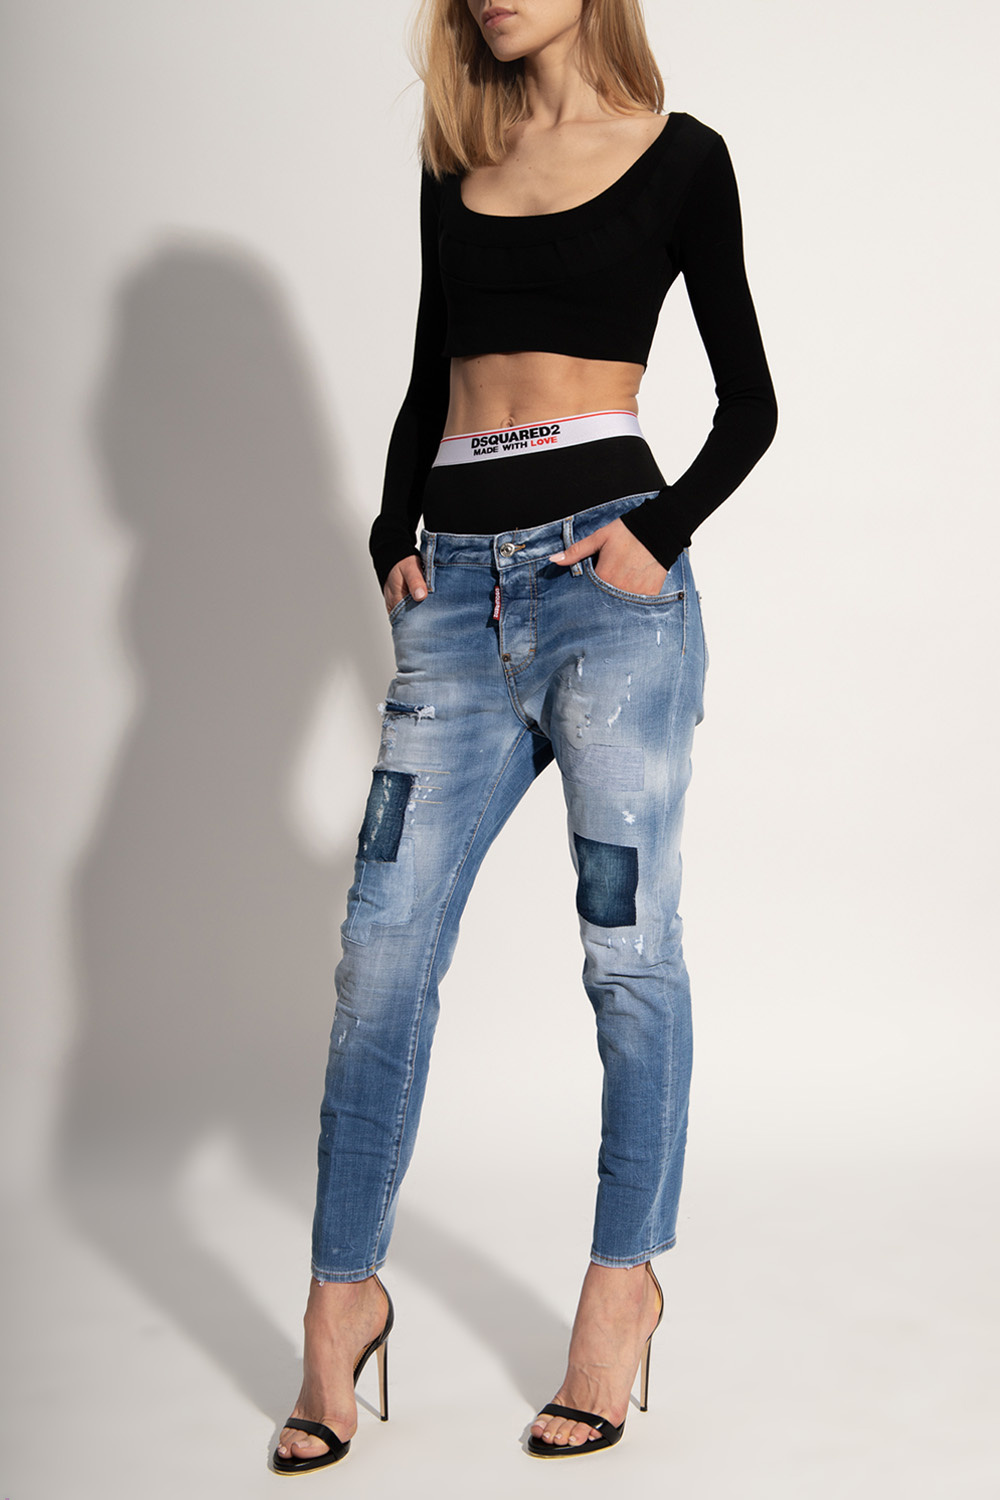 Dsquared2 'Cool Girl' jeans | Women's Clothing | Vitkac